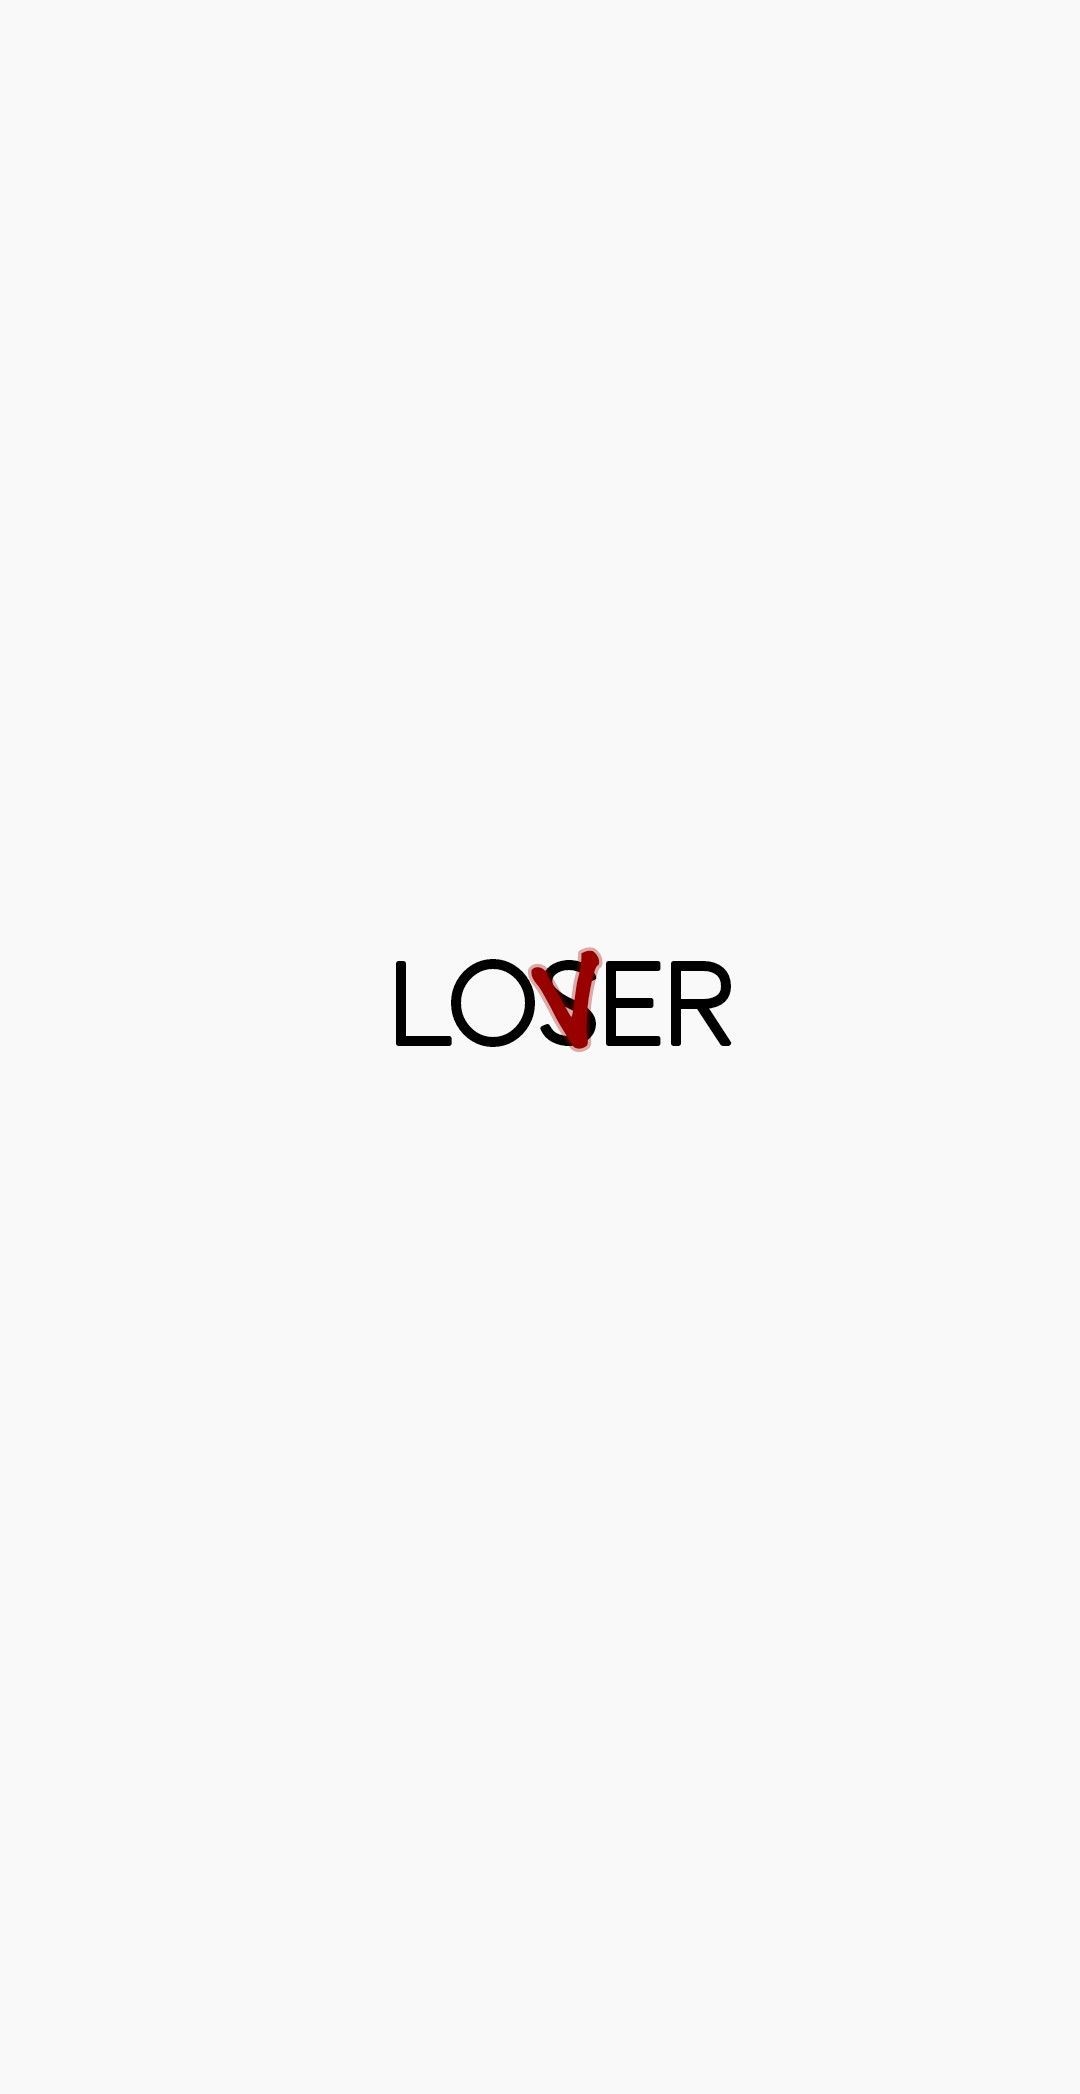 Lover Loser Wallpapers - Wallpaper Cave.